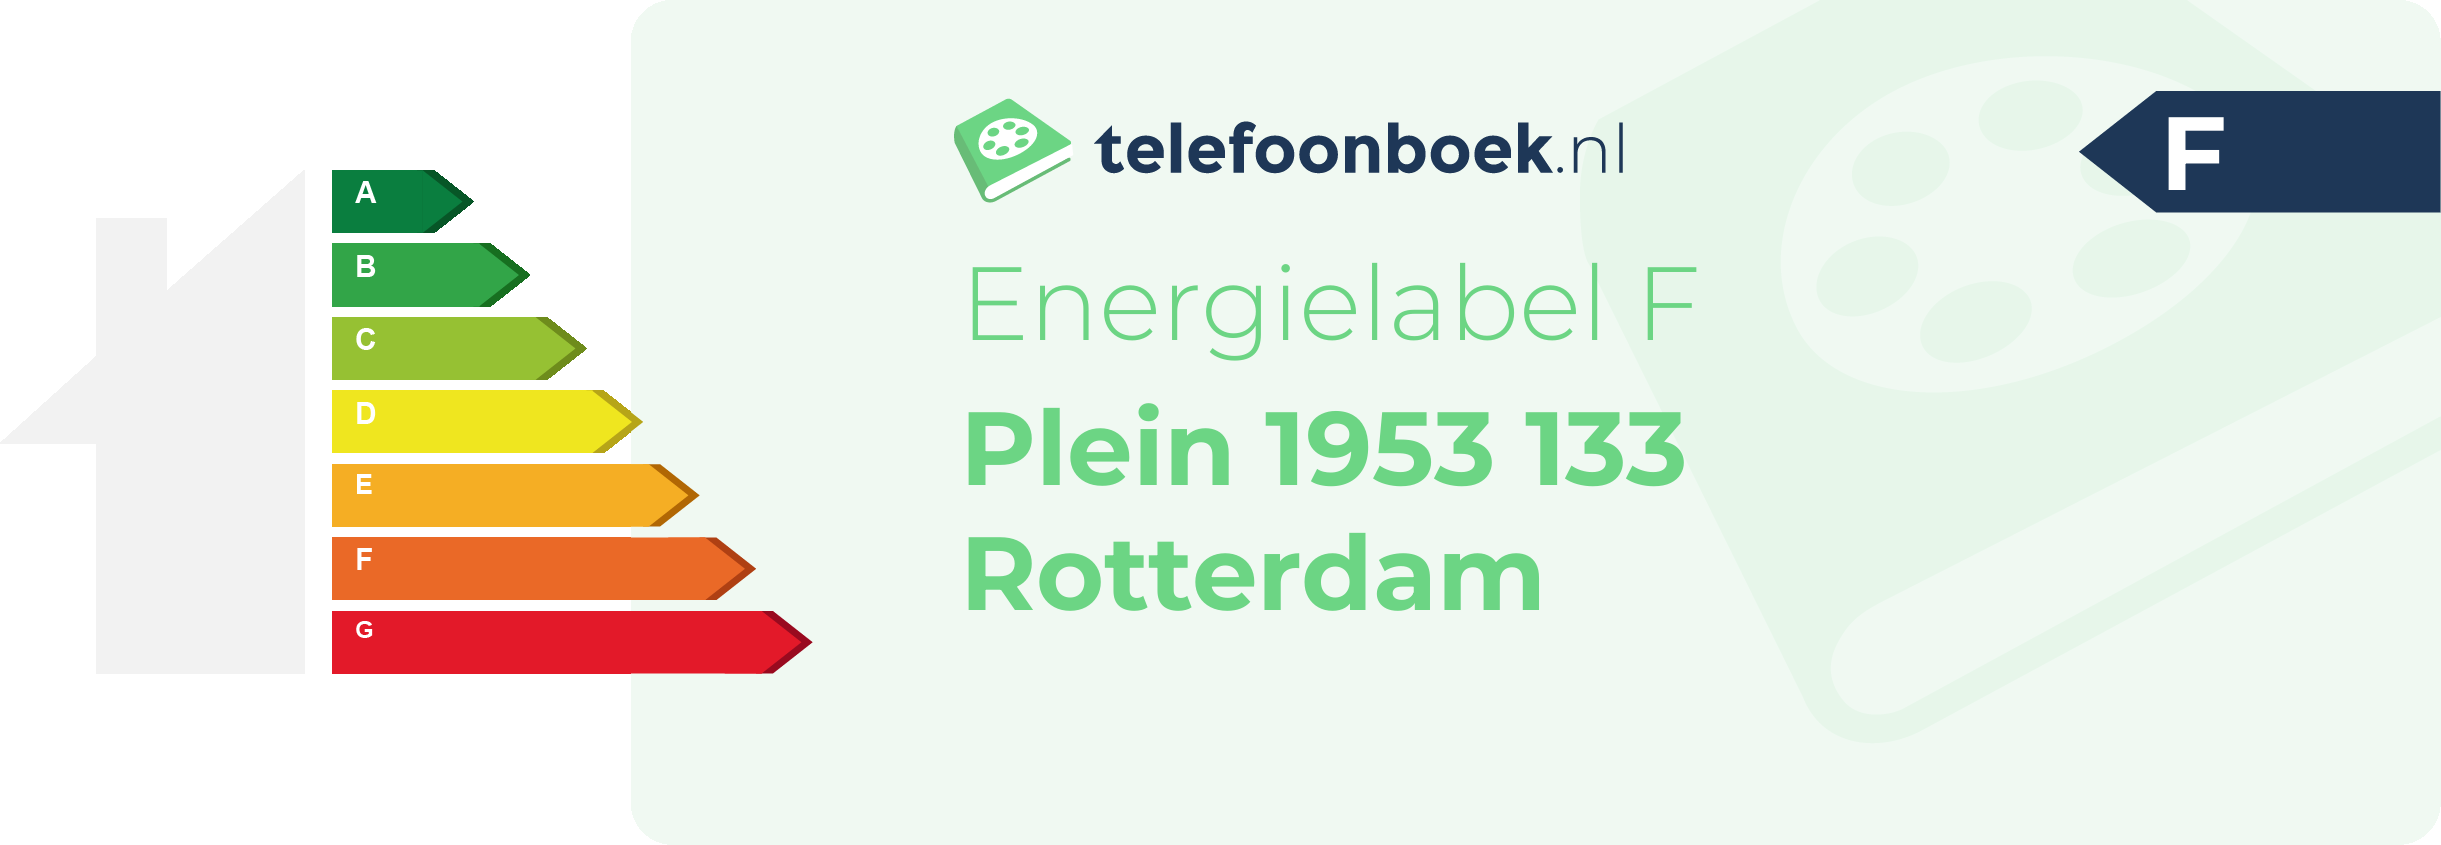 Energielabel Plein 1953 133 Rotterdam